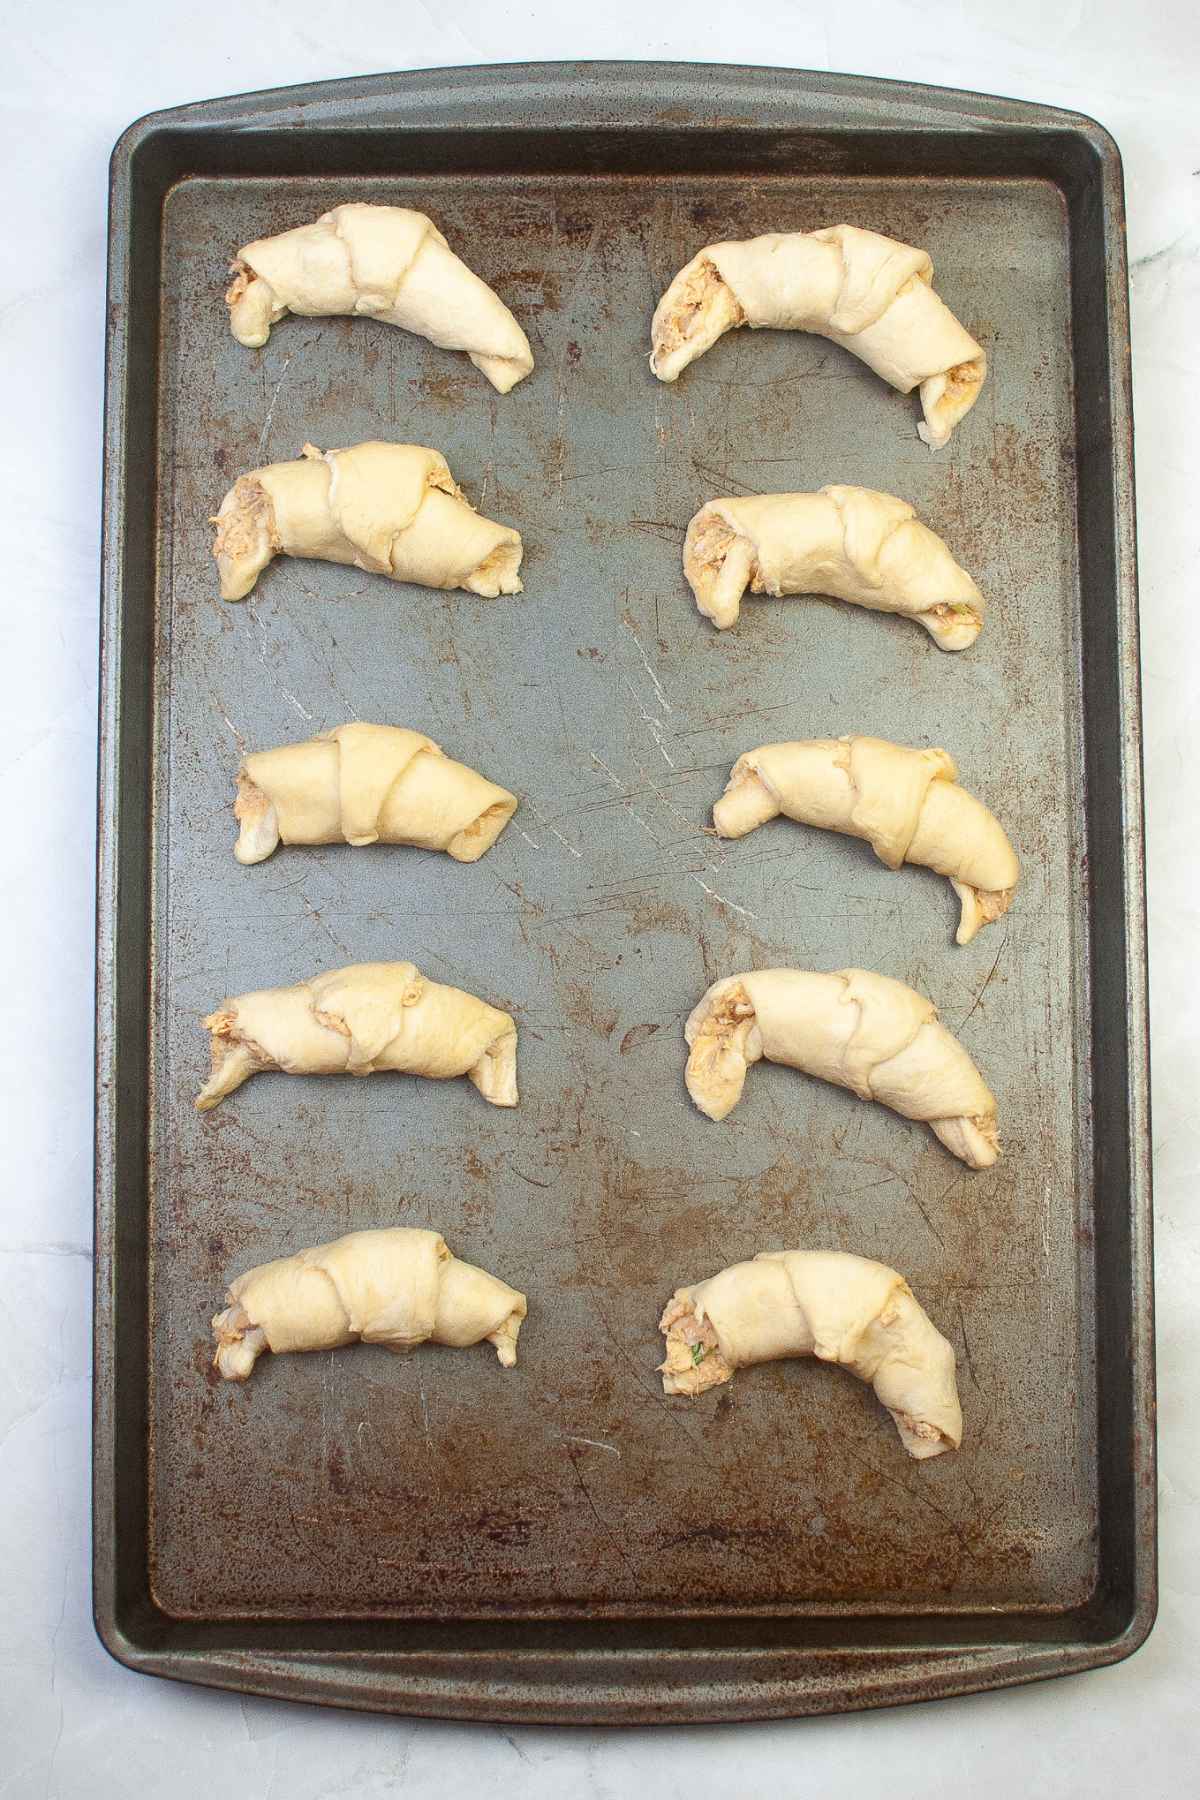 Unbaked crescent rolls on baking sheet.